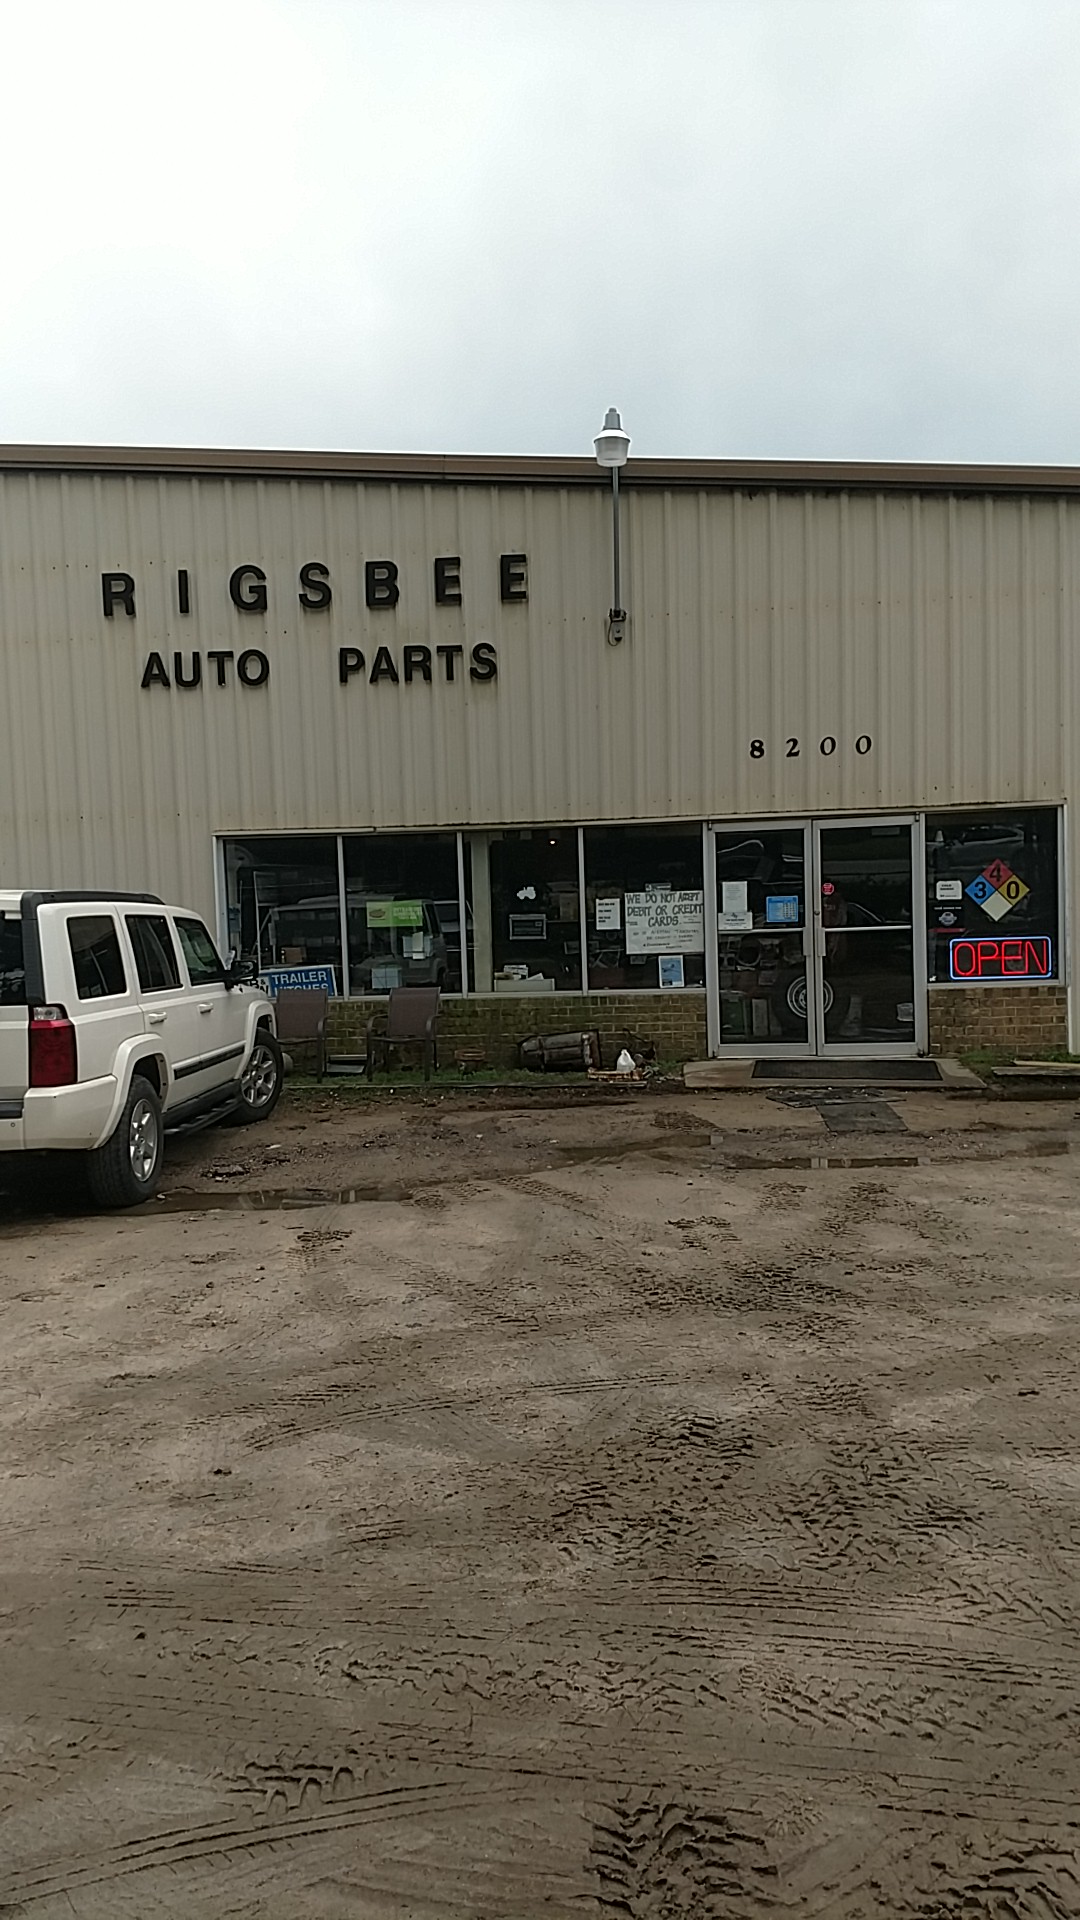 Rigsbee Auto Parts